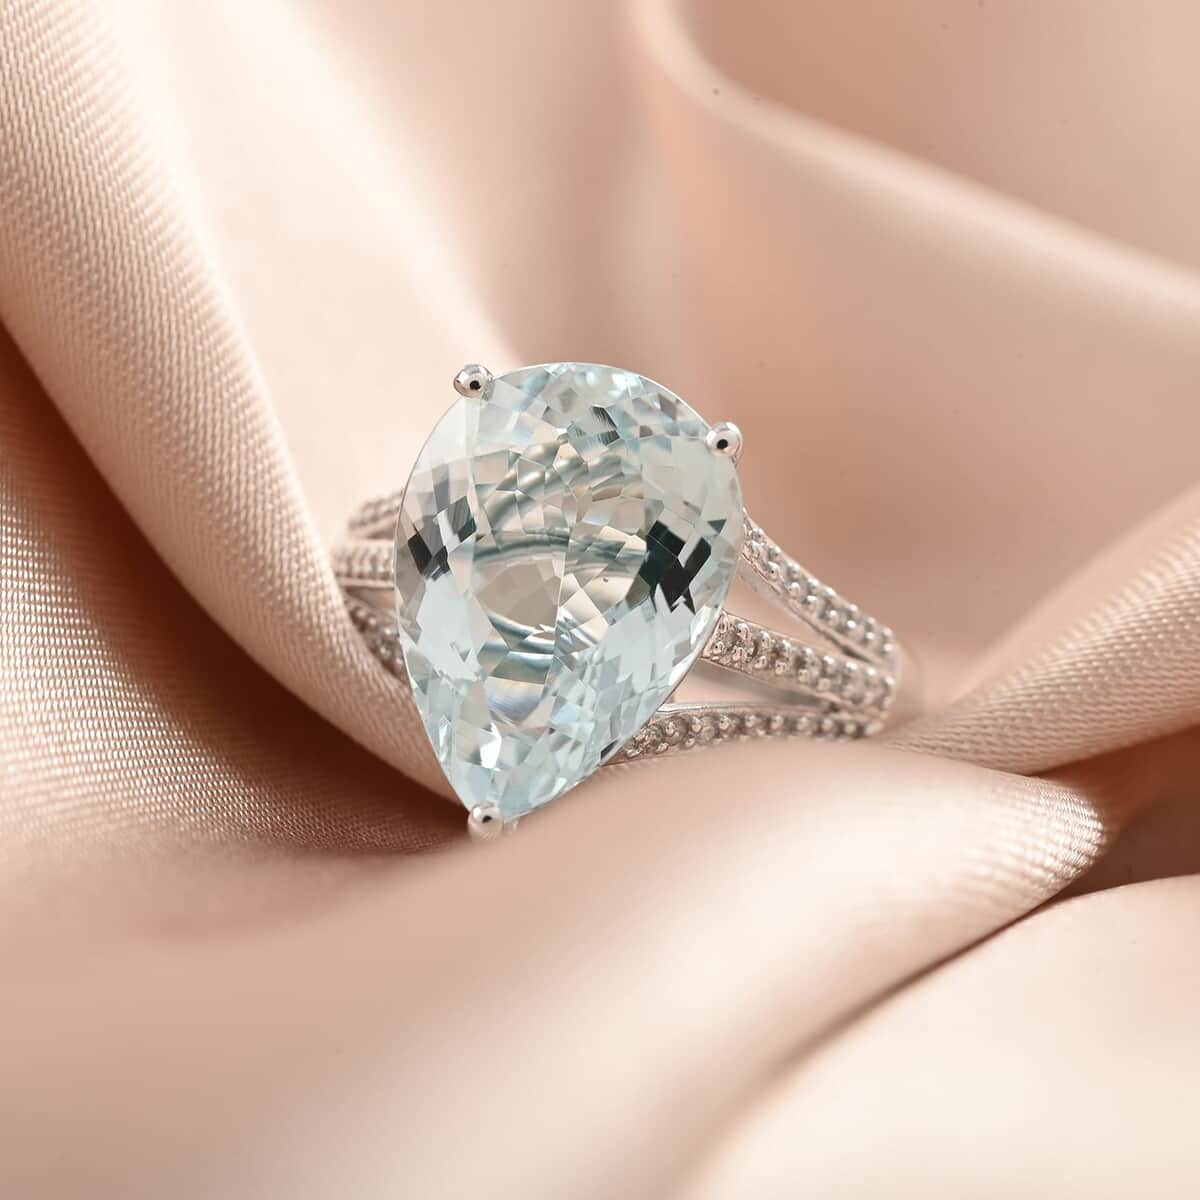 Luxoro 14K White Gold Premium Mangoro Aquamarine and G-H I2 Diamond Ring (Size 10.0) 4.50 ctw image number 1